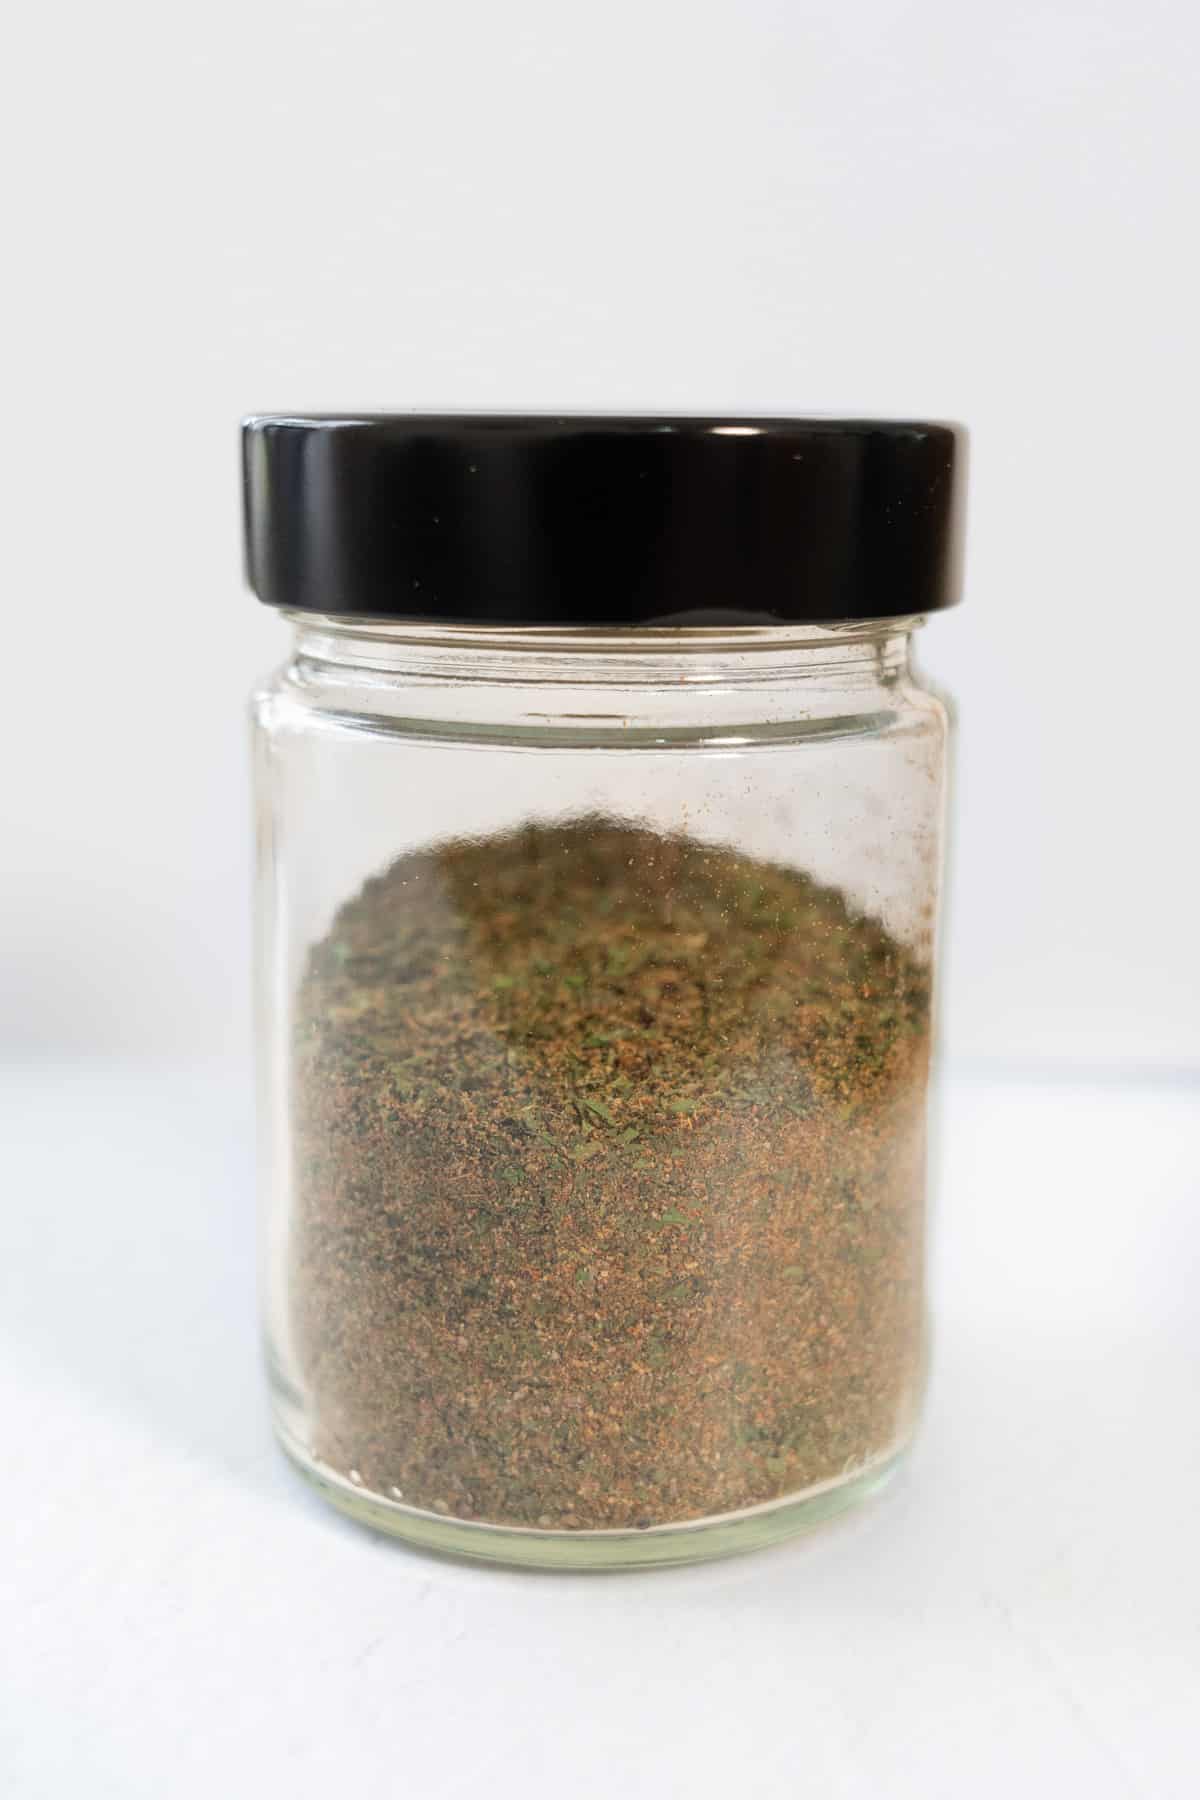 a glass jar with a black lid filled with falafel spice blend